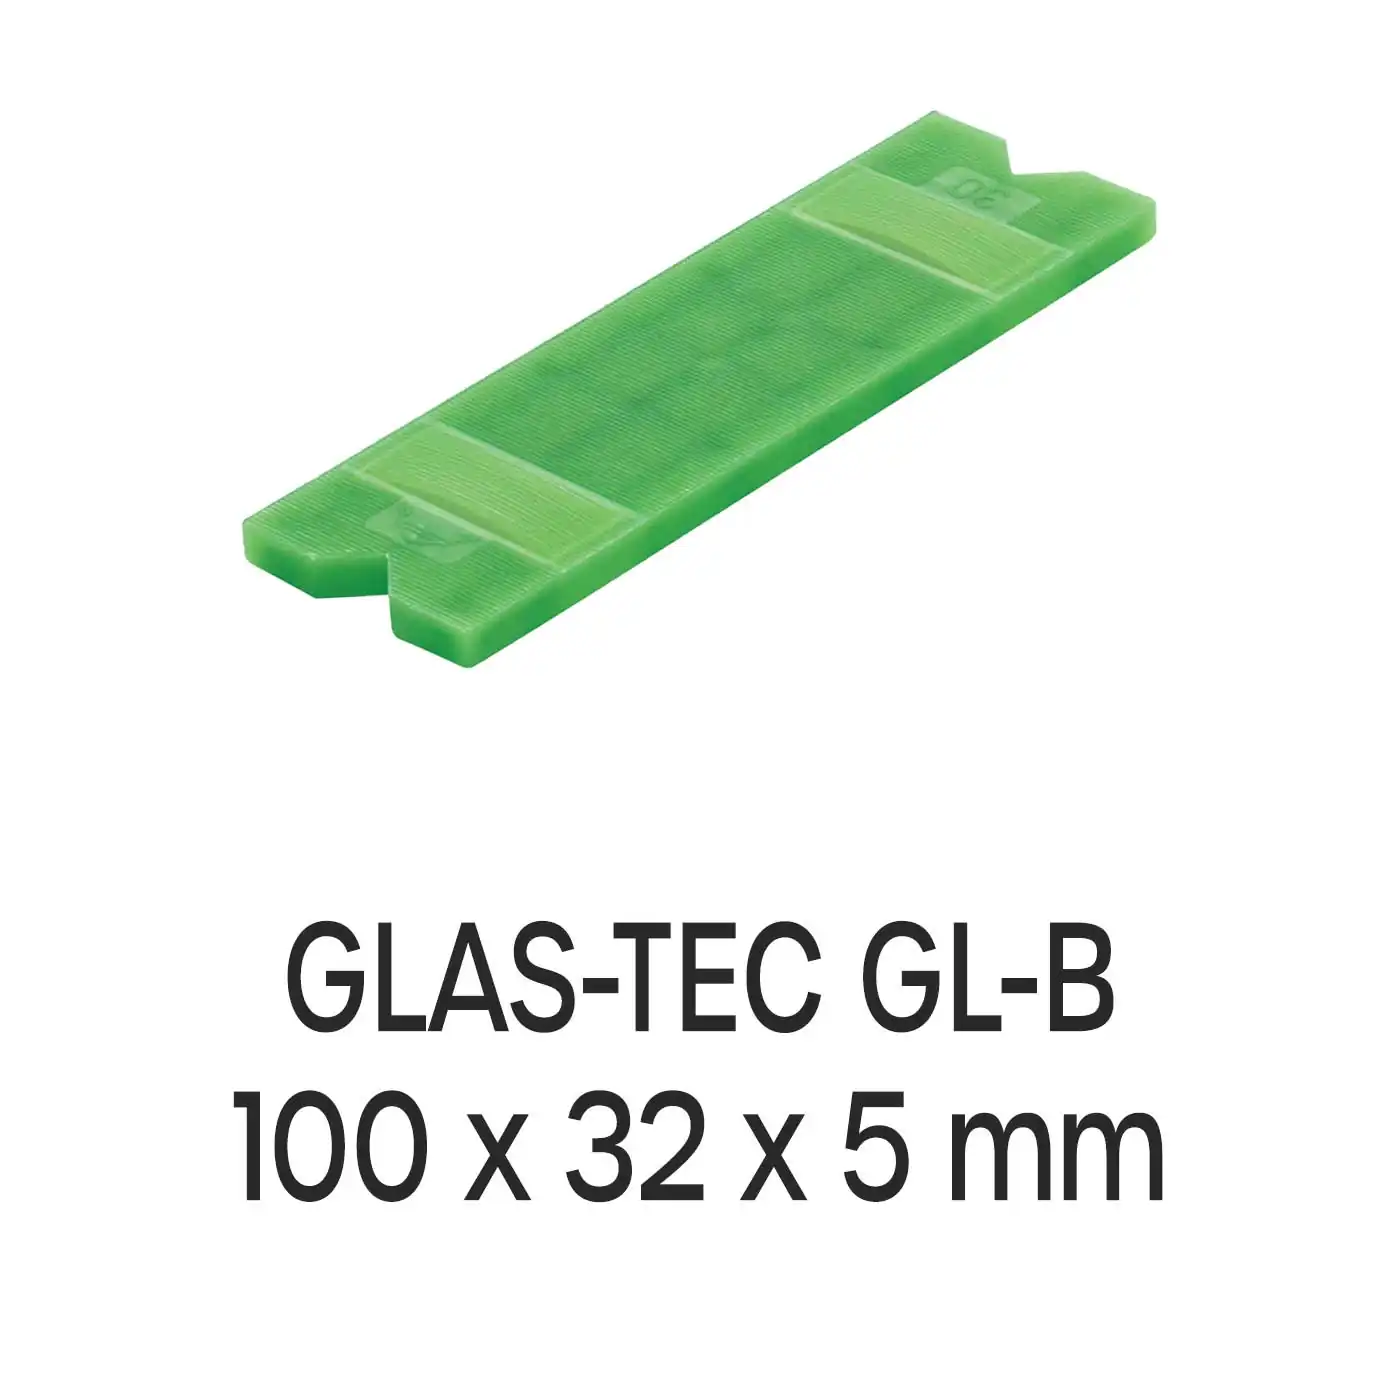 Roto GLAS-TEC GL-B 100 x 32 x 5 mm Verglasungsklötze 500 Stück